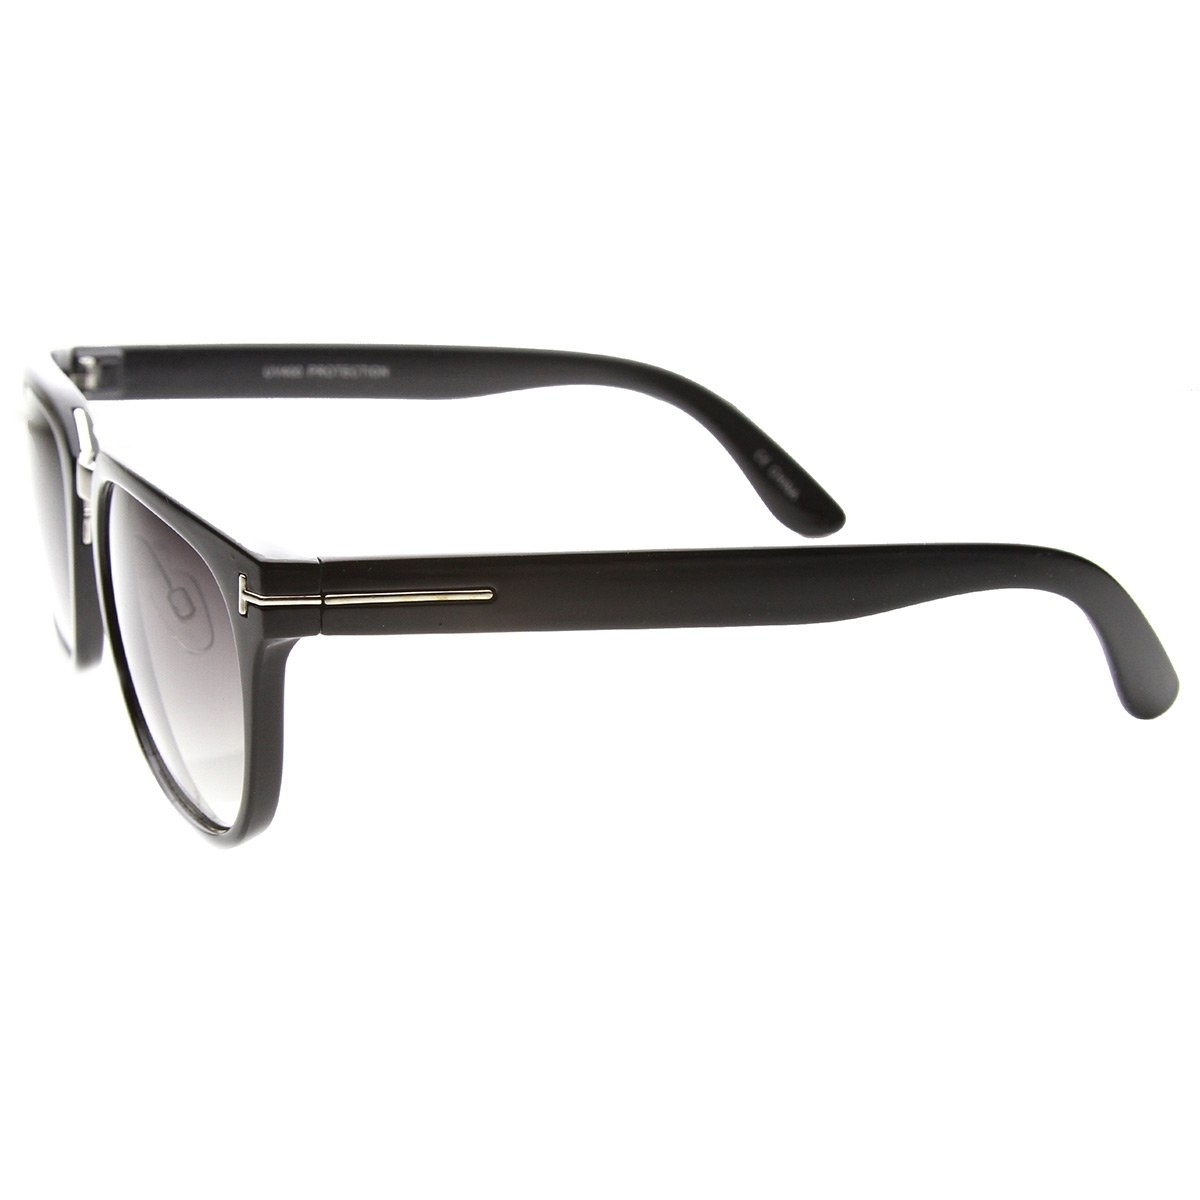 Metal Bridged T-Riveted Horned Rimmed Classic Style Sunglasses - Matte-Black Green